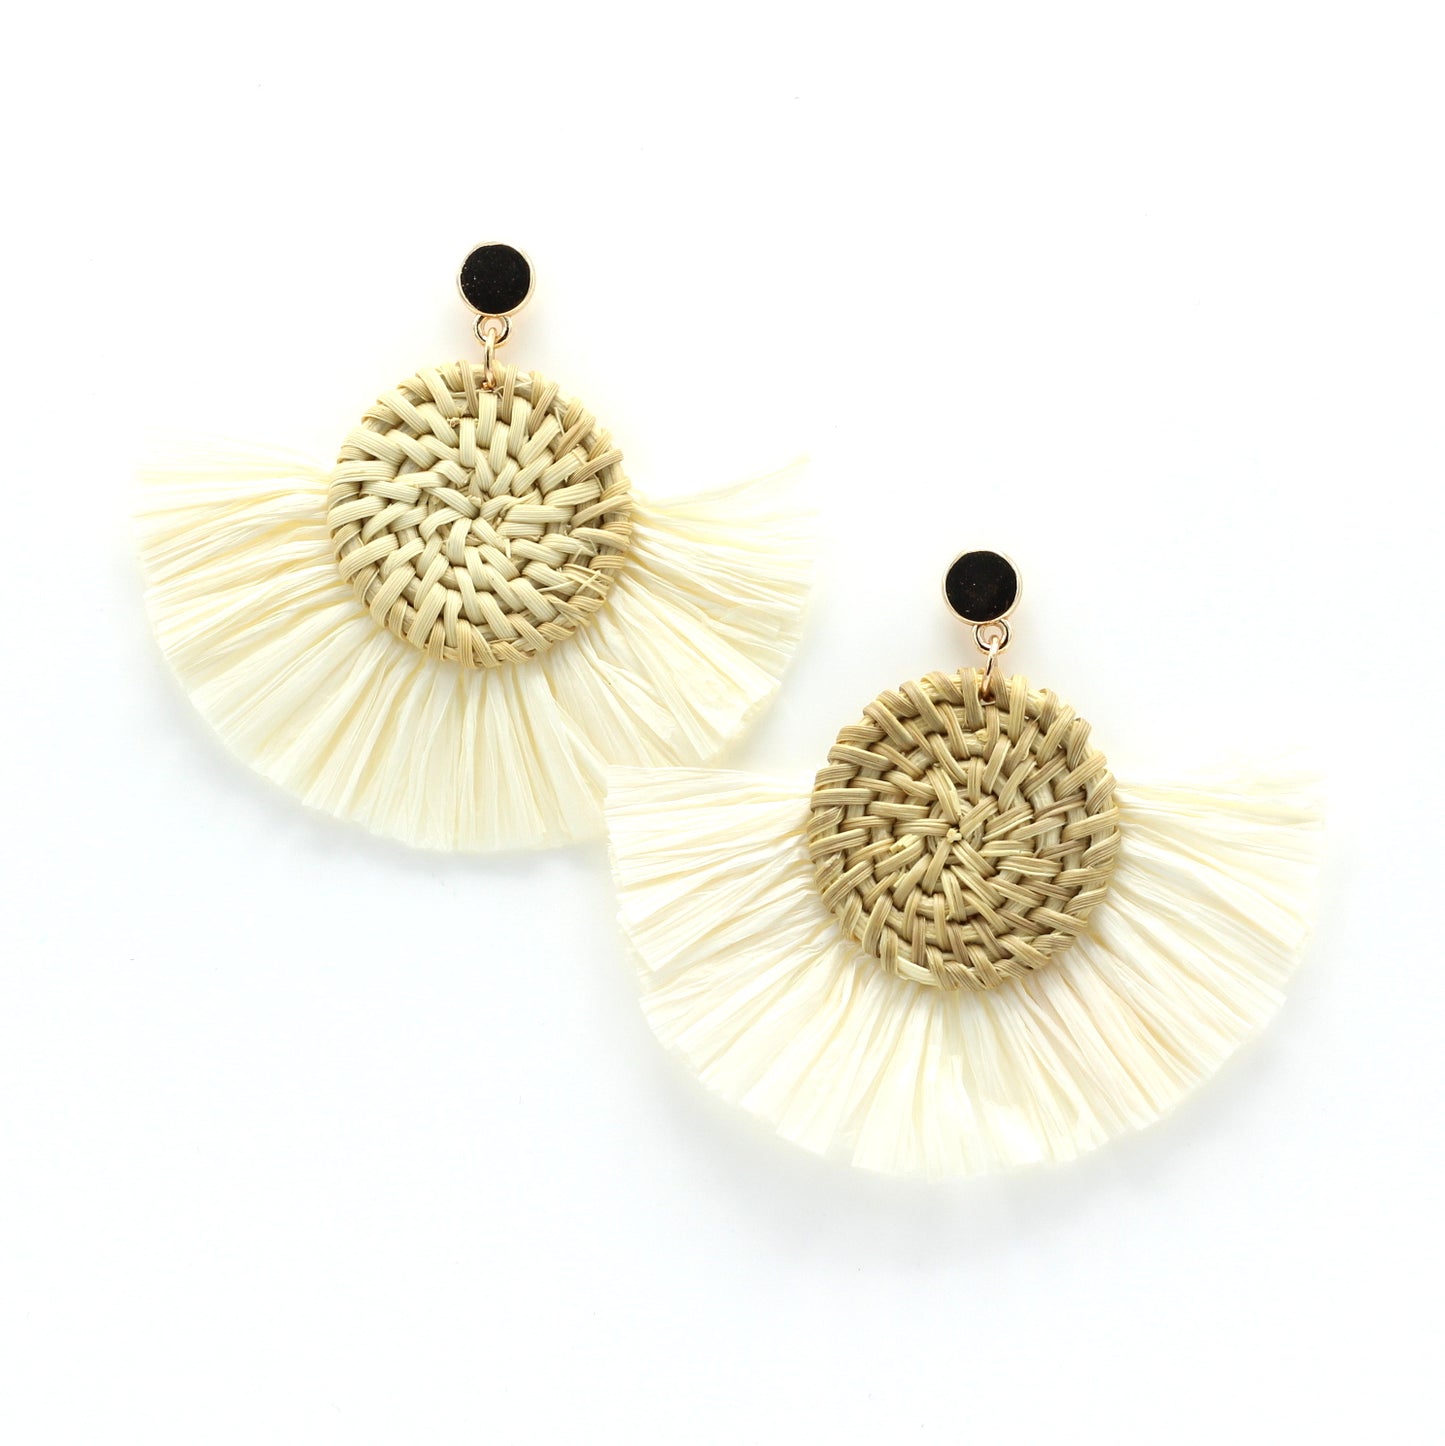 Earrings Handmade with Natural Raffia and Rattan - Hashtag Bamboo